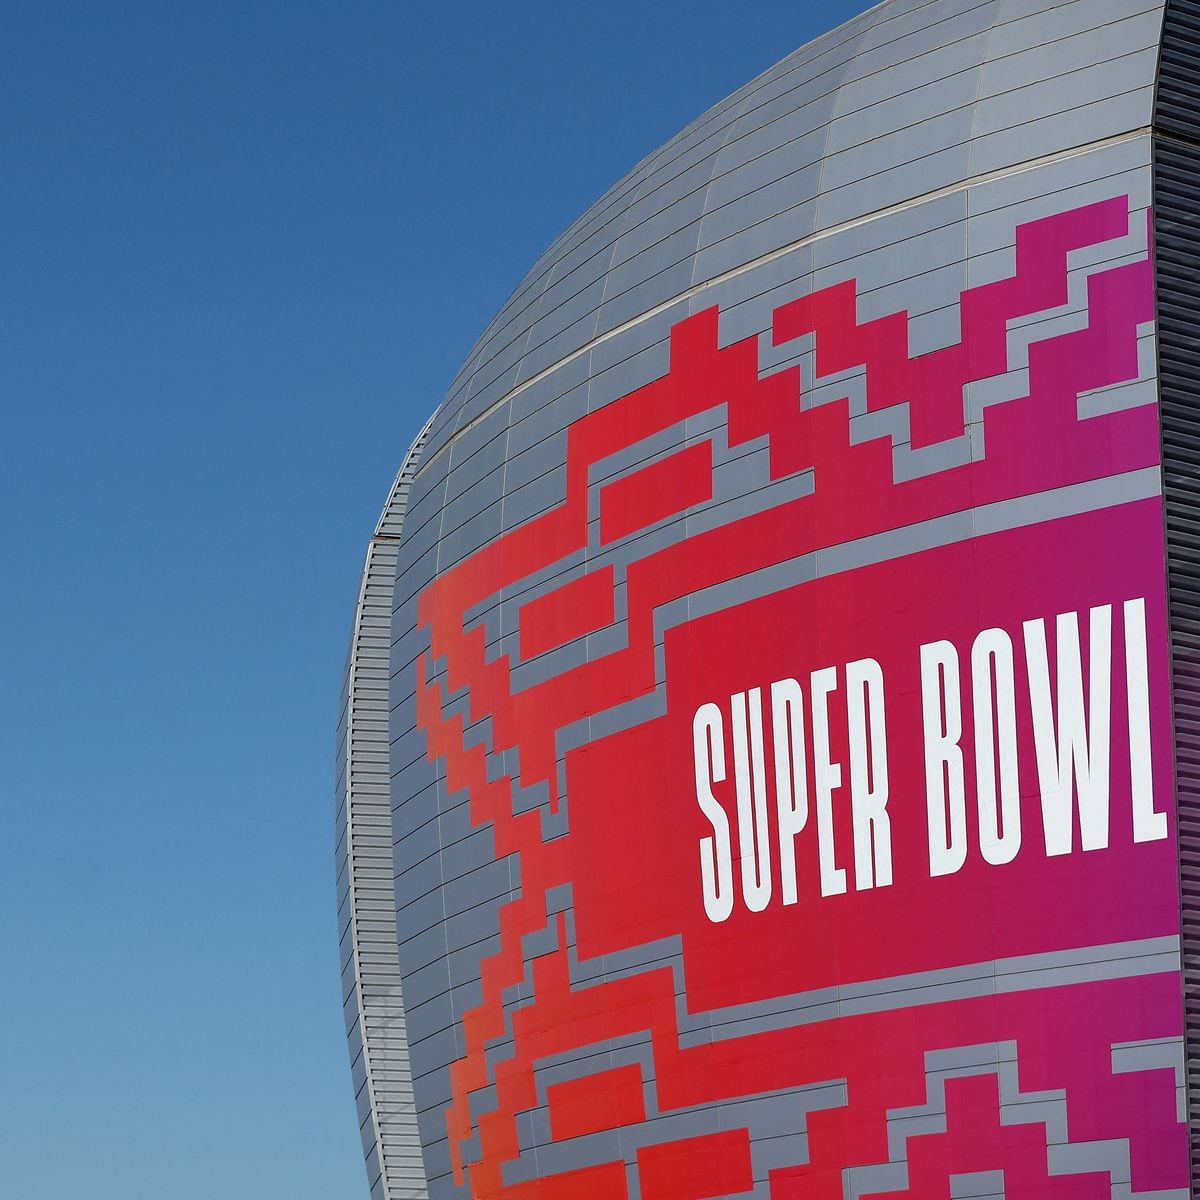 Super Bowl LVII hotel prices surge ahead of big game